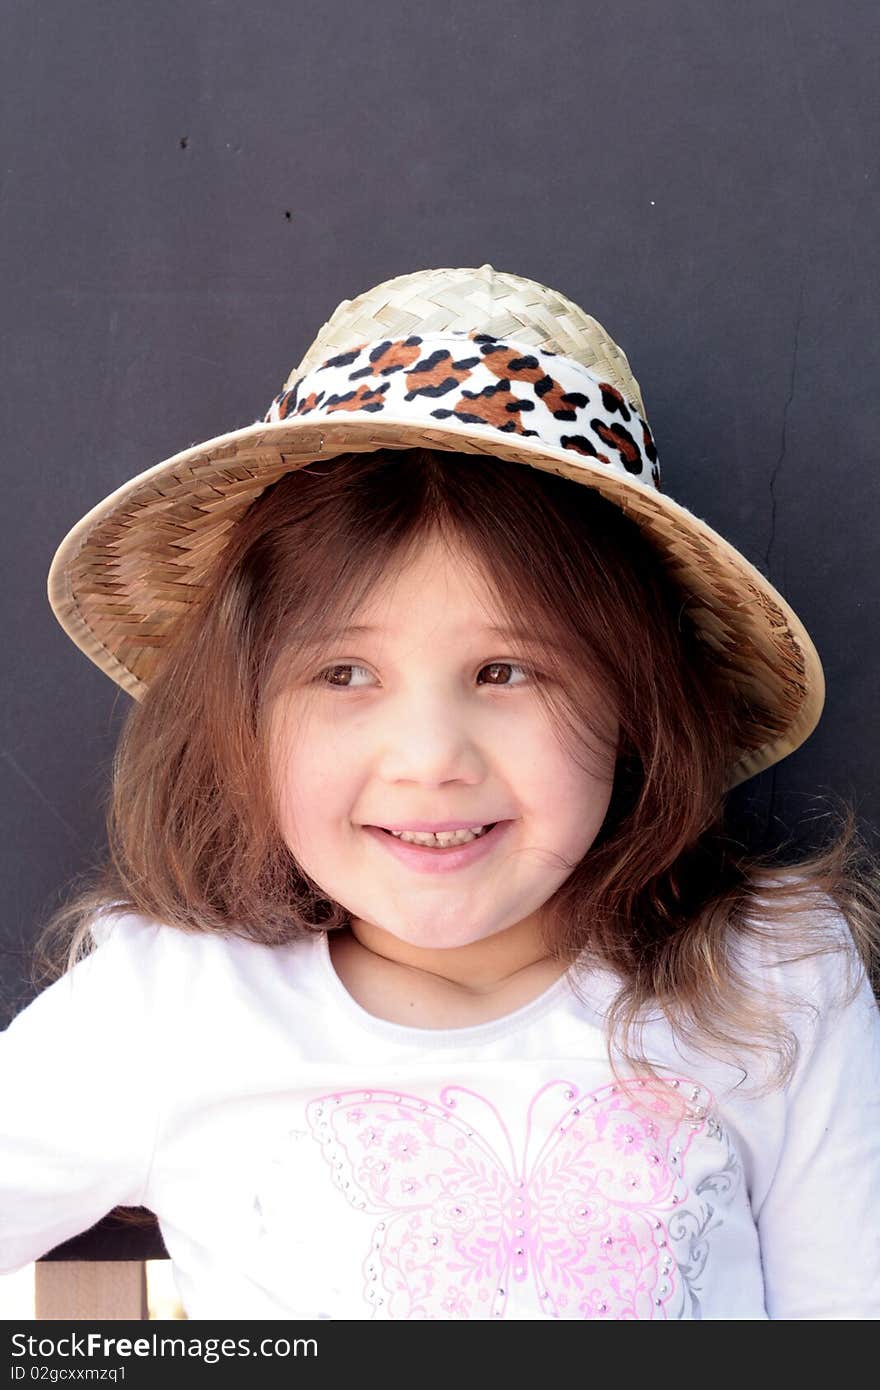 Pretty little girl smiling wearing a straw hat and black background. Pretty little girl smiling wearing a straw hat and black background